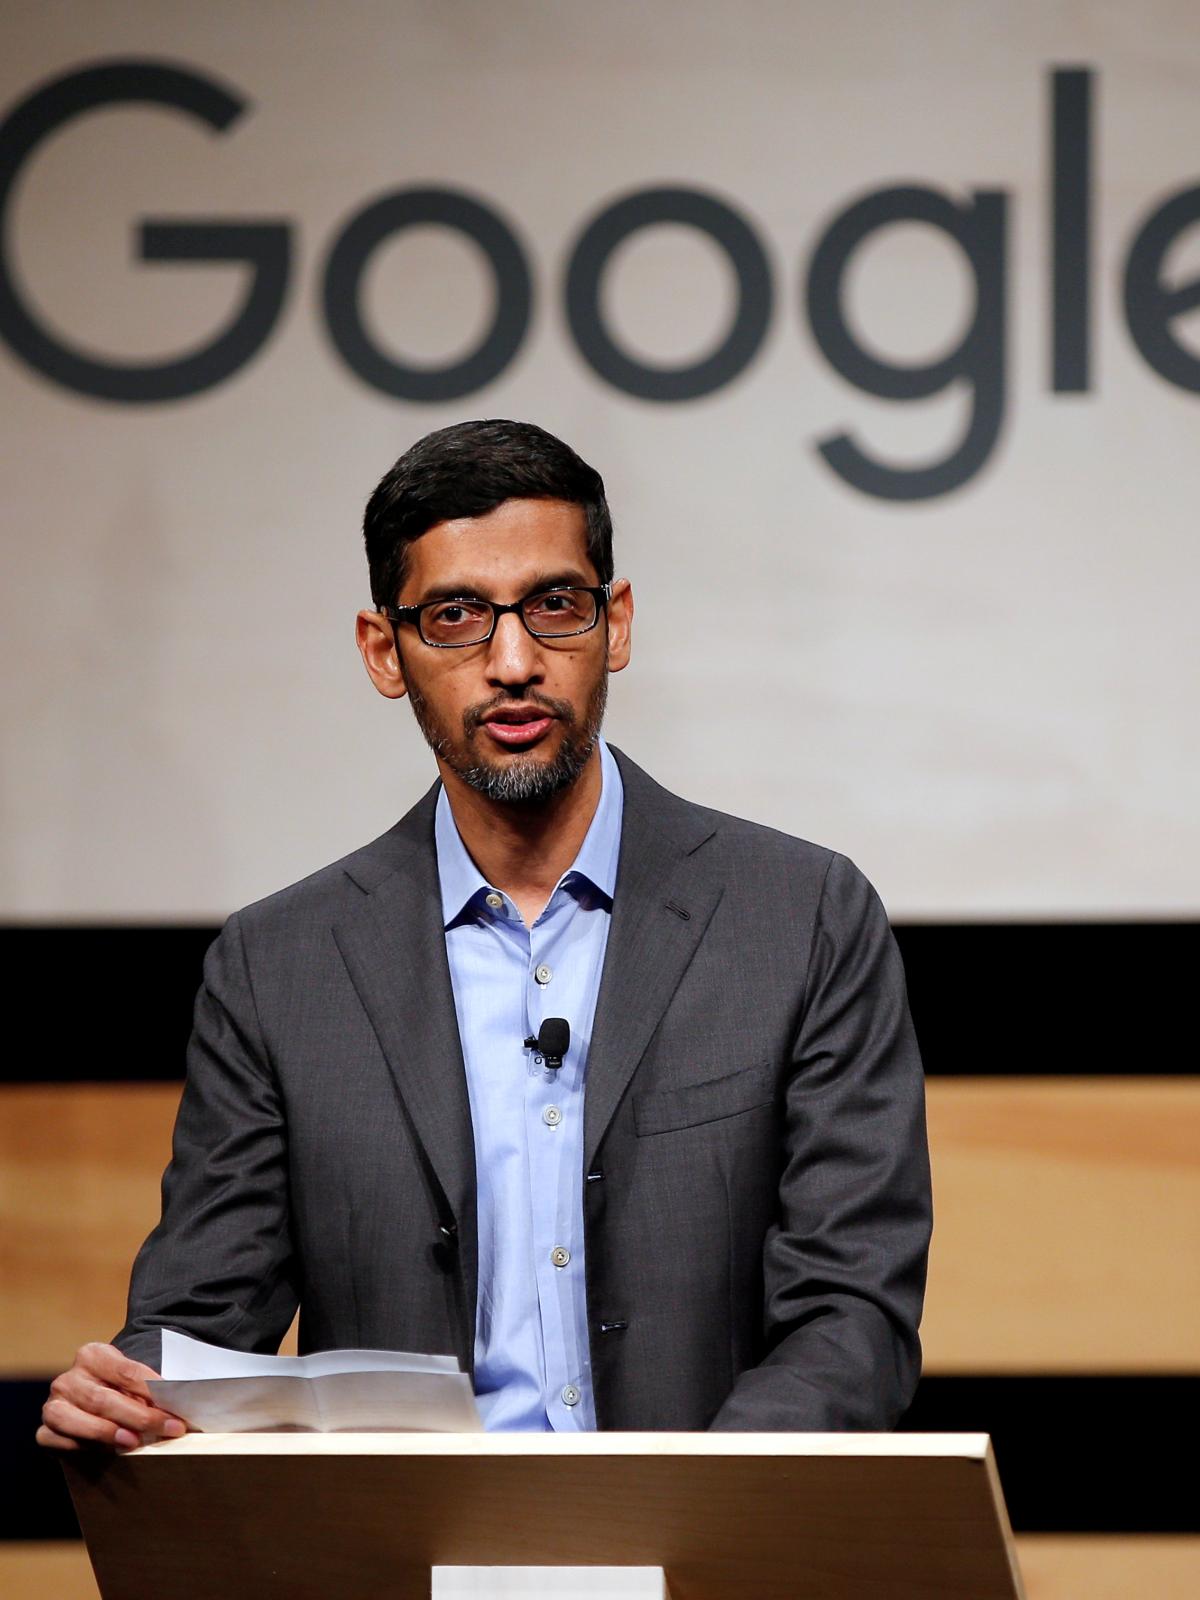 Google search gets chat AI, hints CEO Sundar Pichai